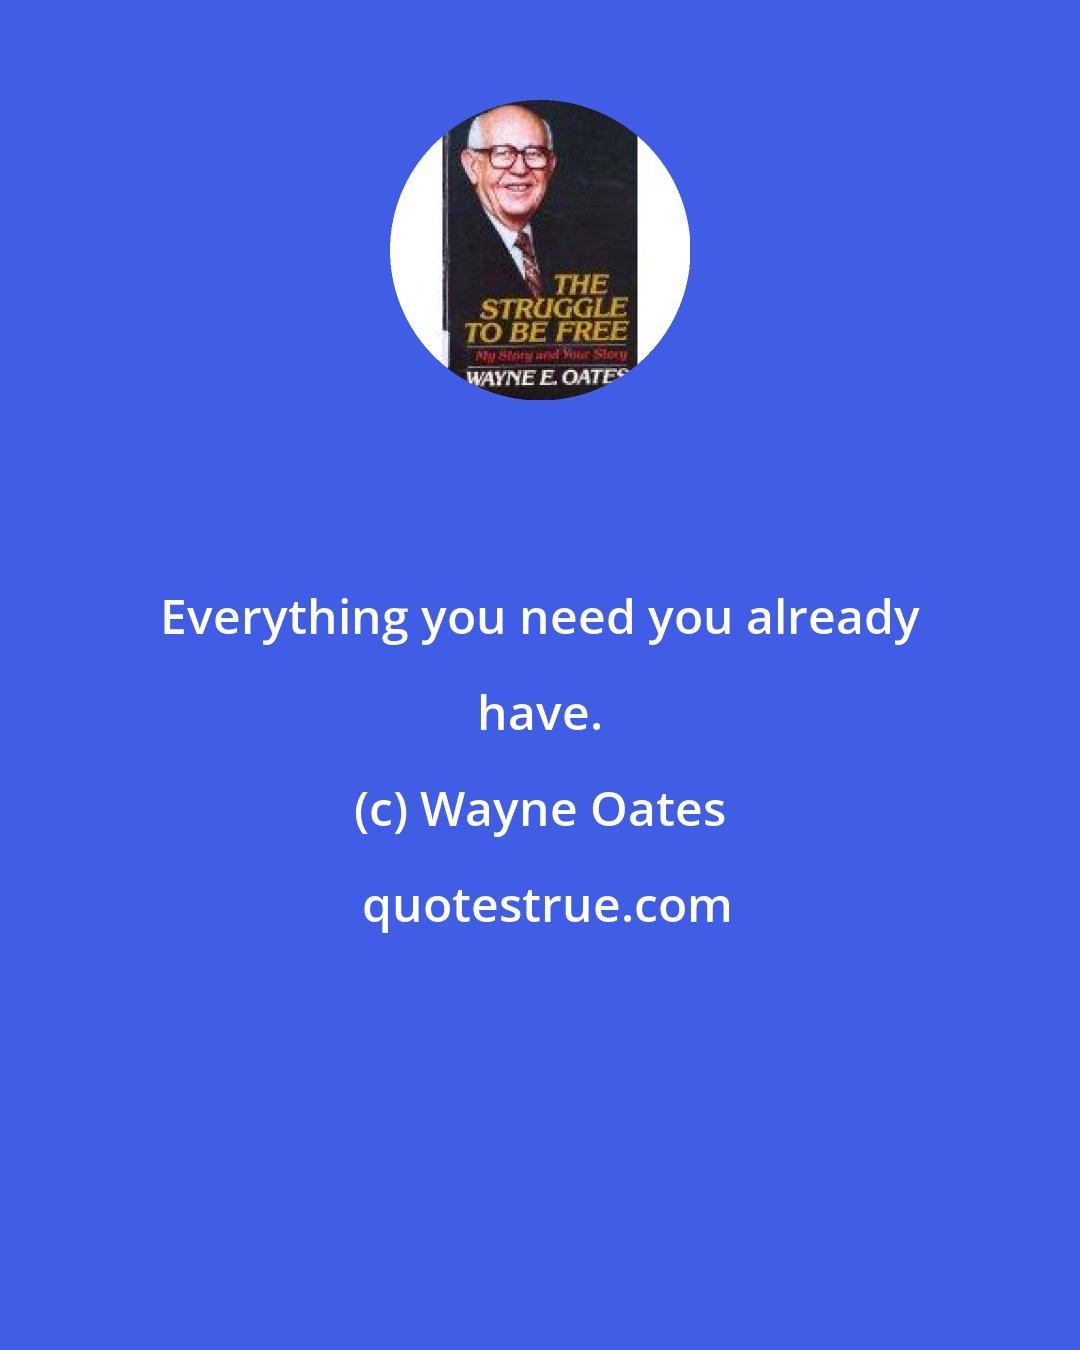 Wayne Oates: Everything you need you already have.